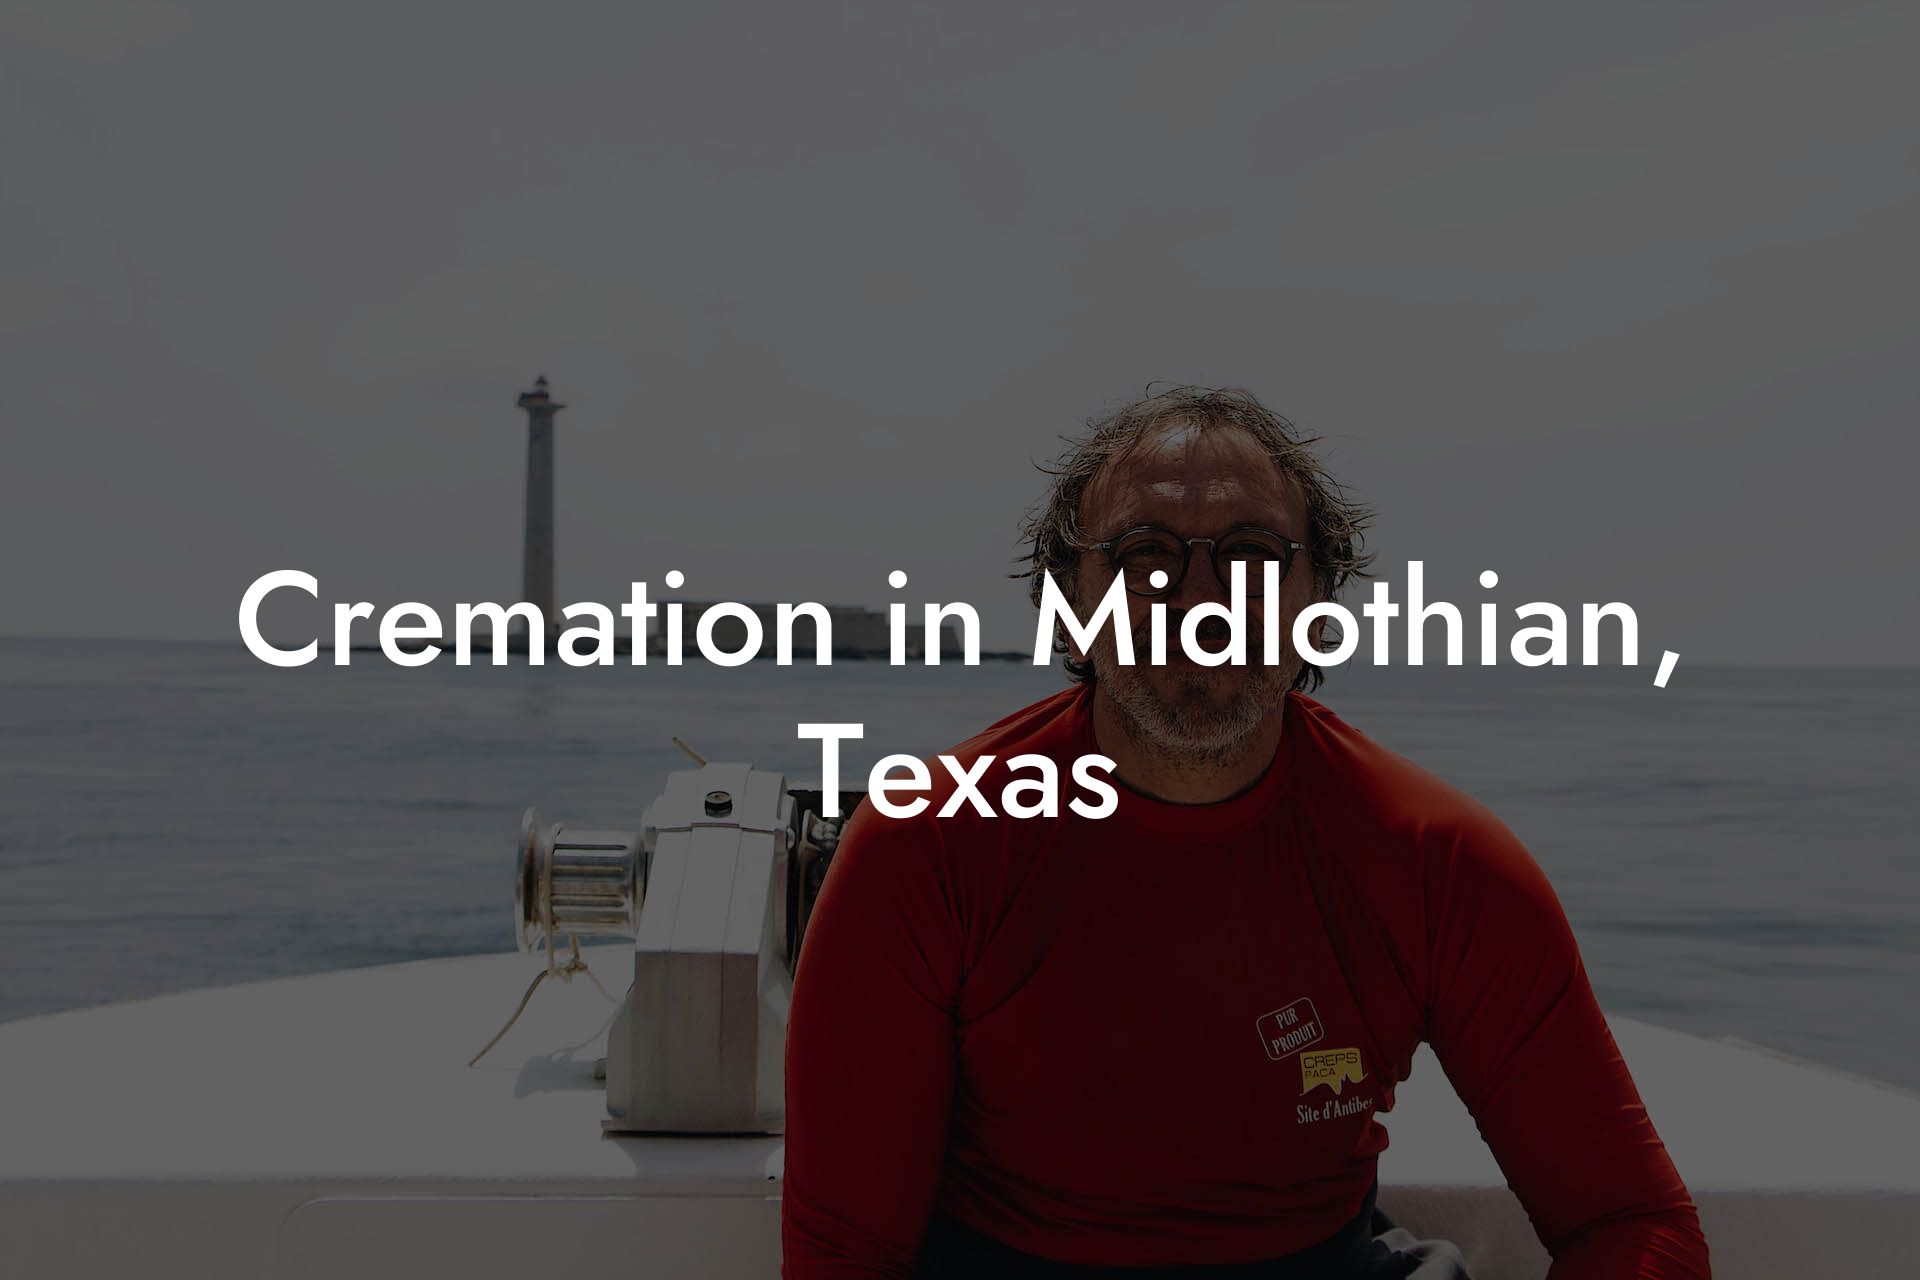 Cremation in Midlothian, Texas